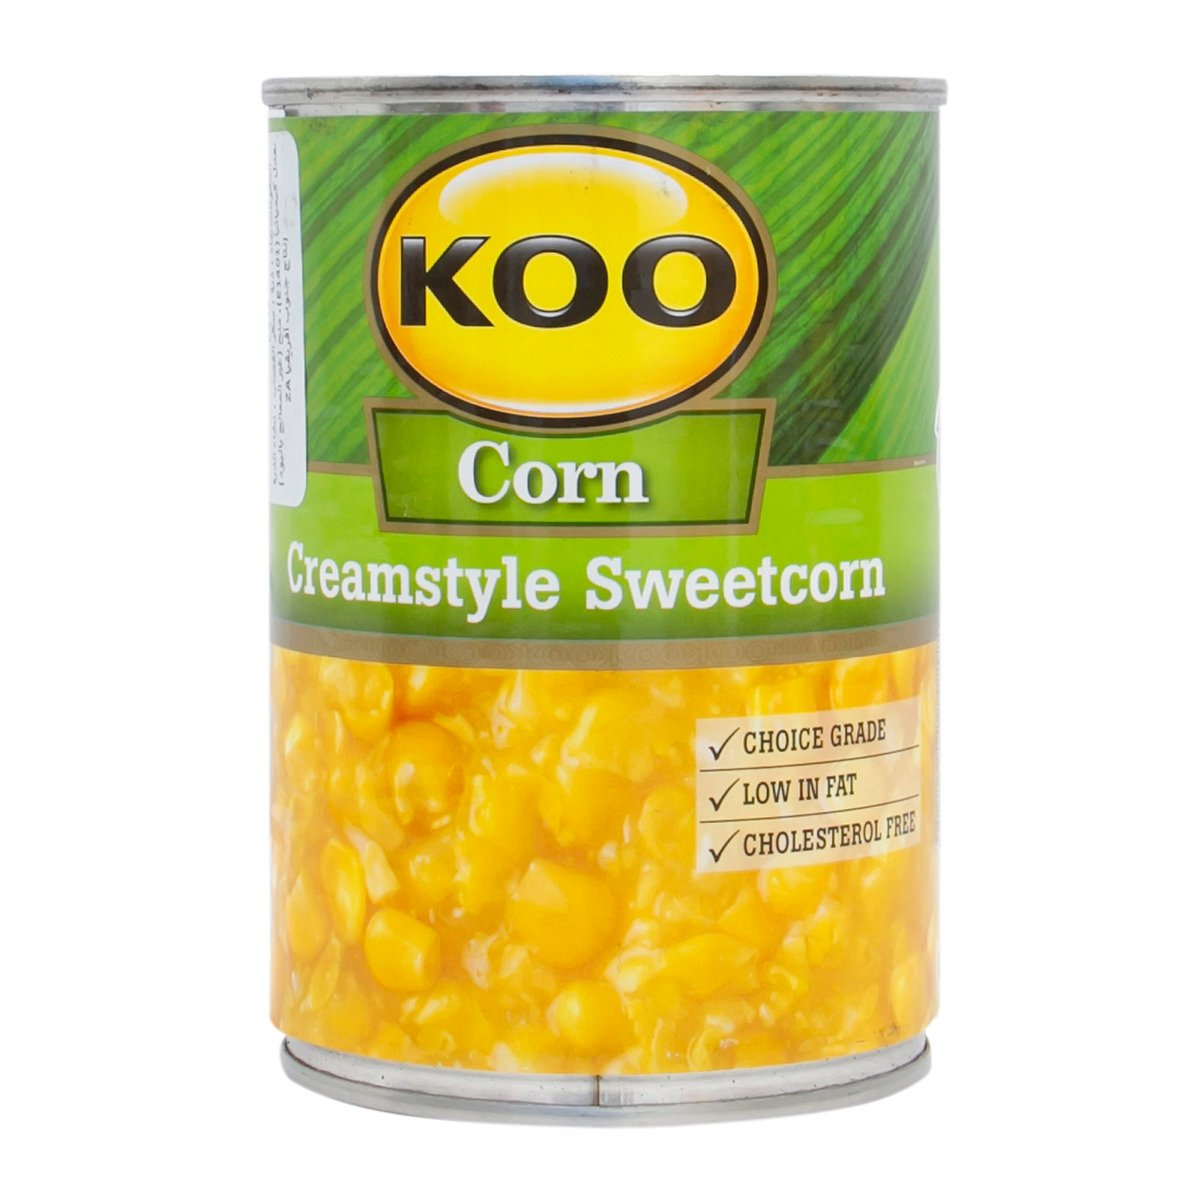 Koo Corn Cream Style Sweetcorn 415 g